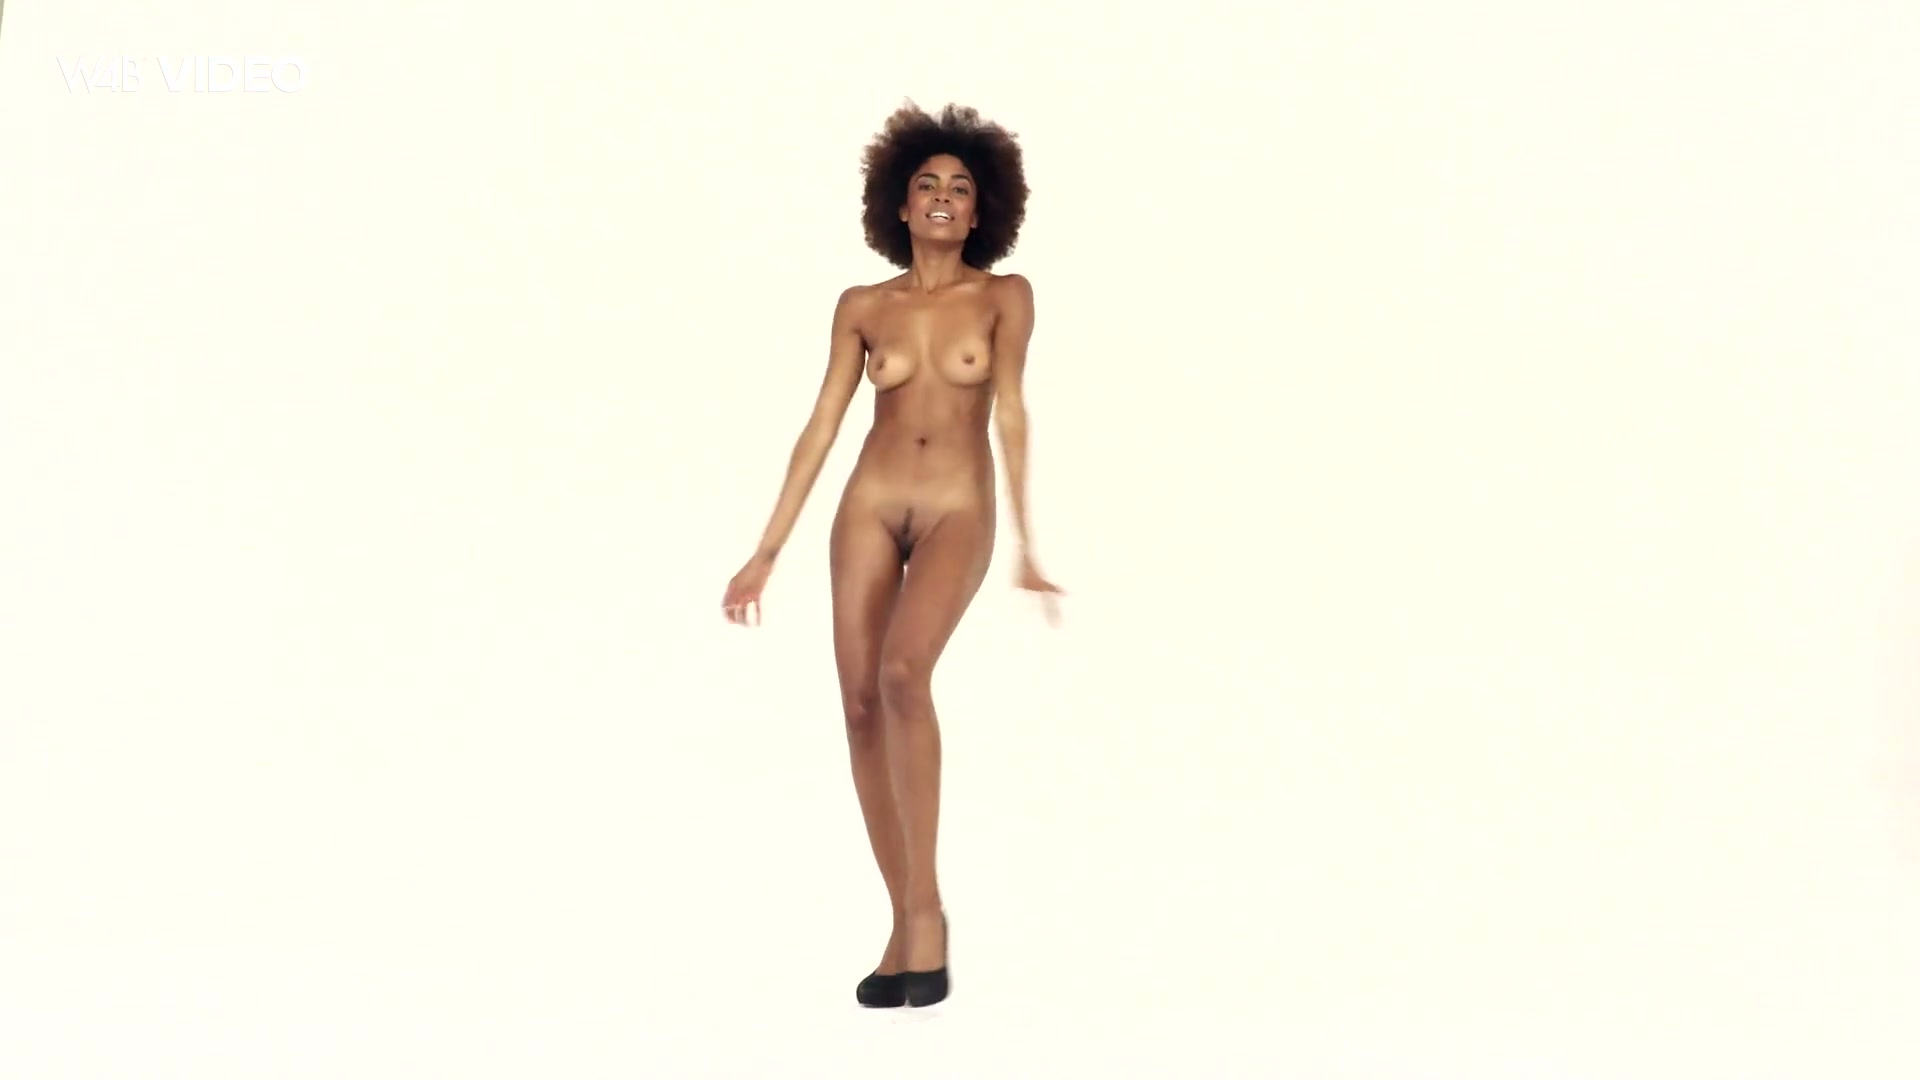 Brazilian solo model Luna Corazon exposes her tight naked body